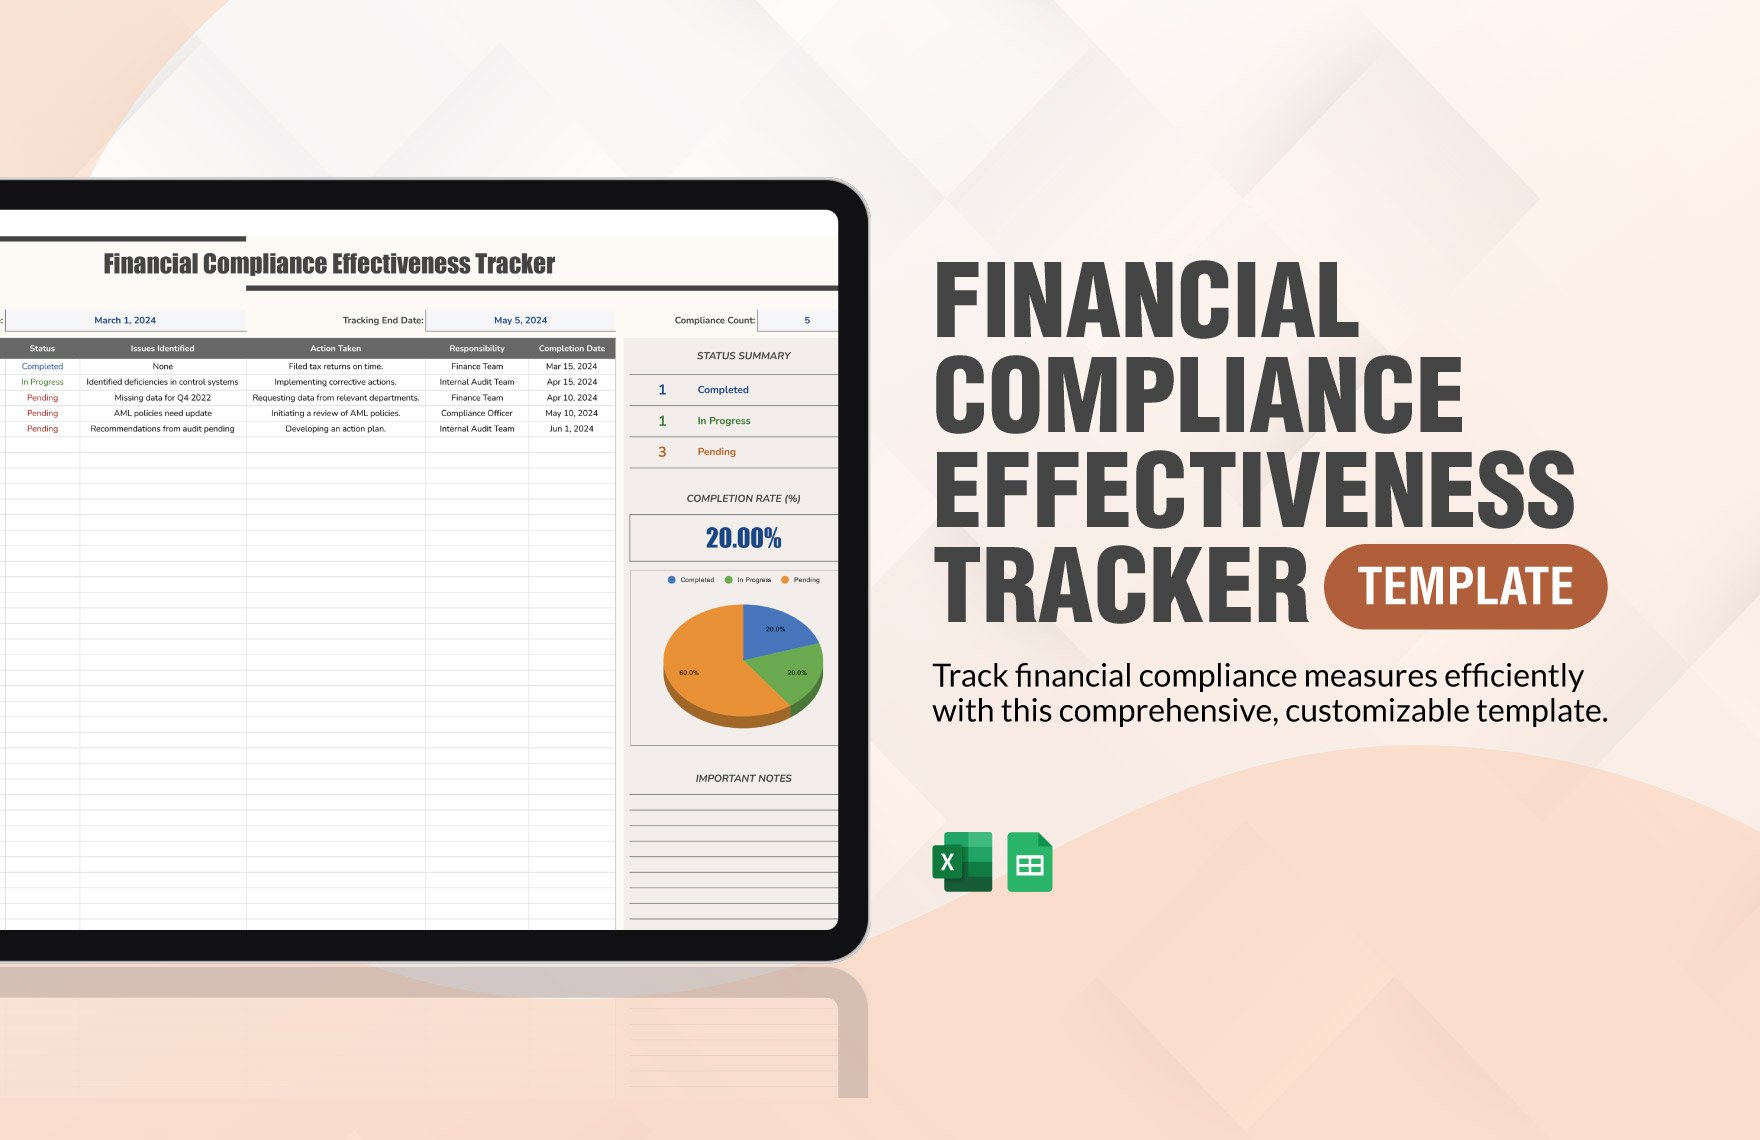 Financial Compliance Effectiveness Tracker Template